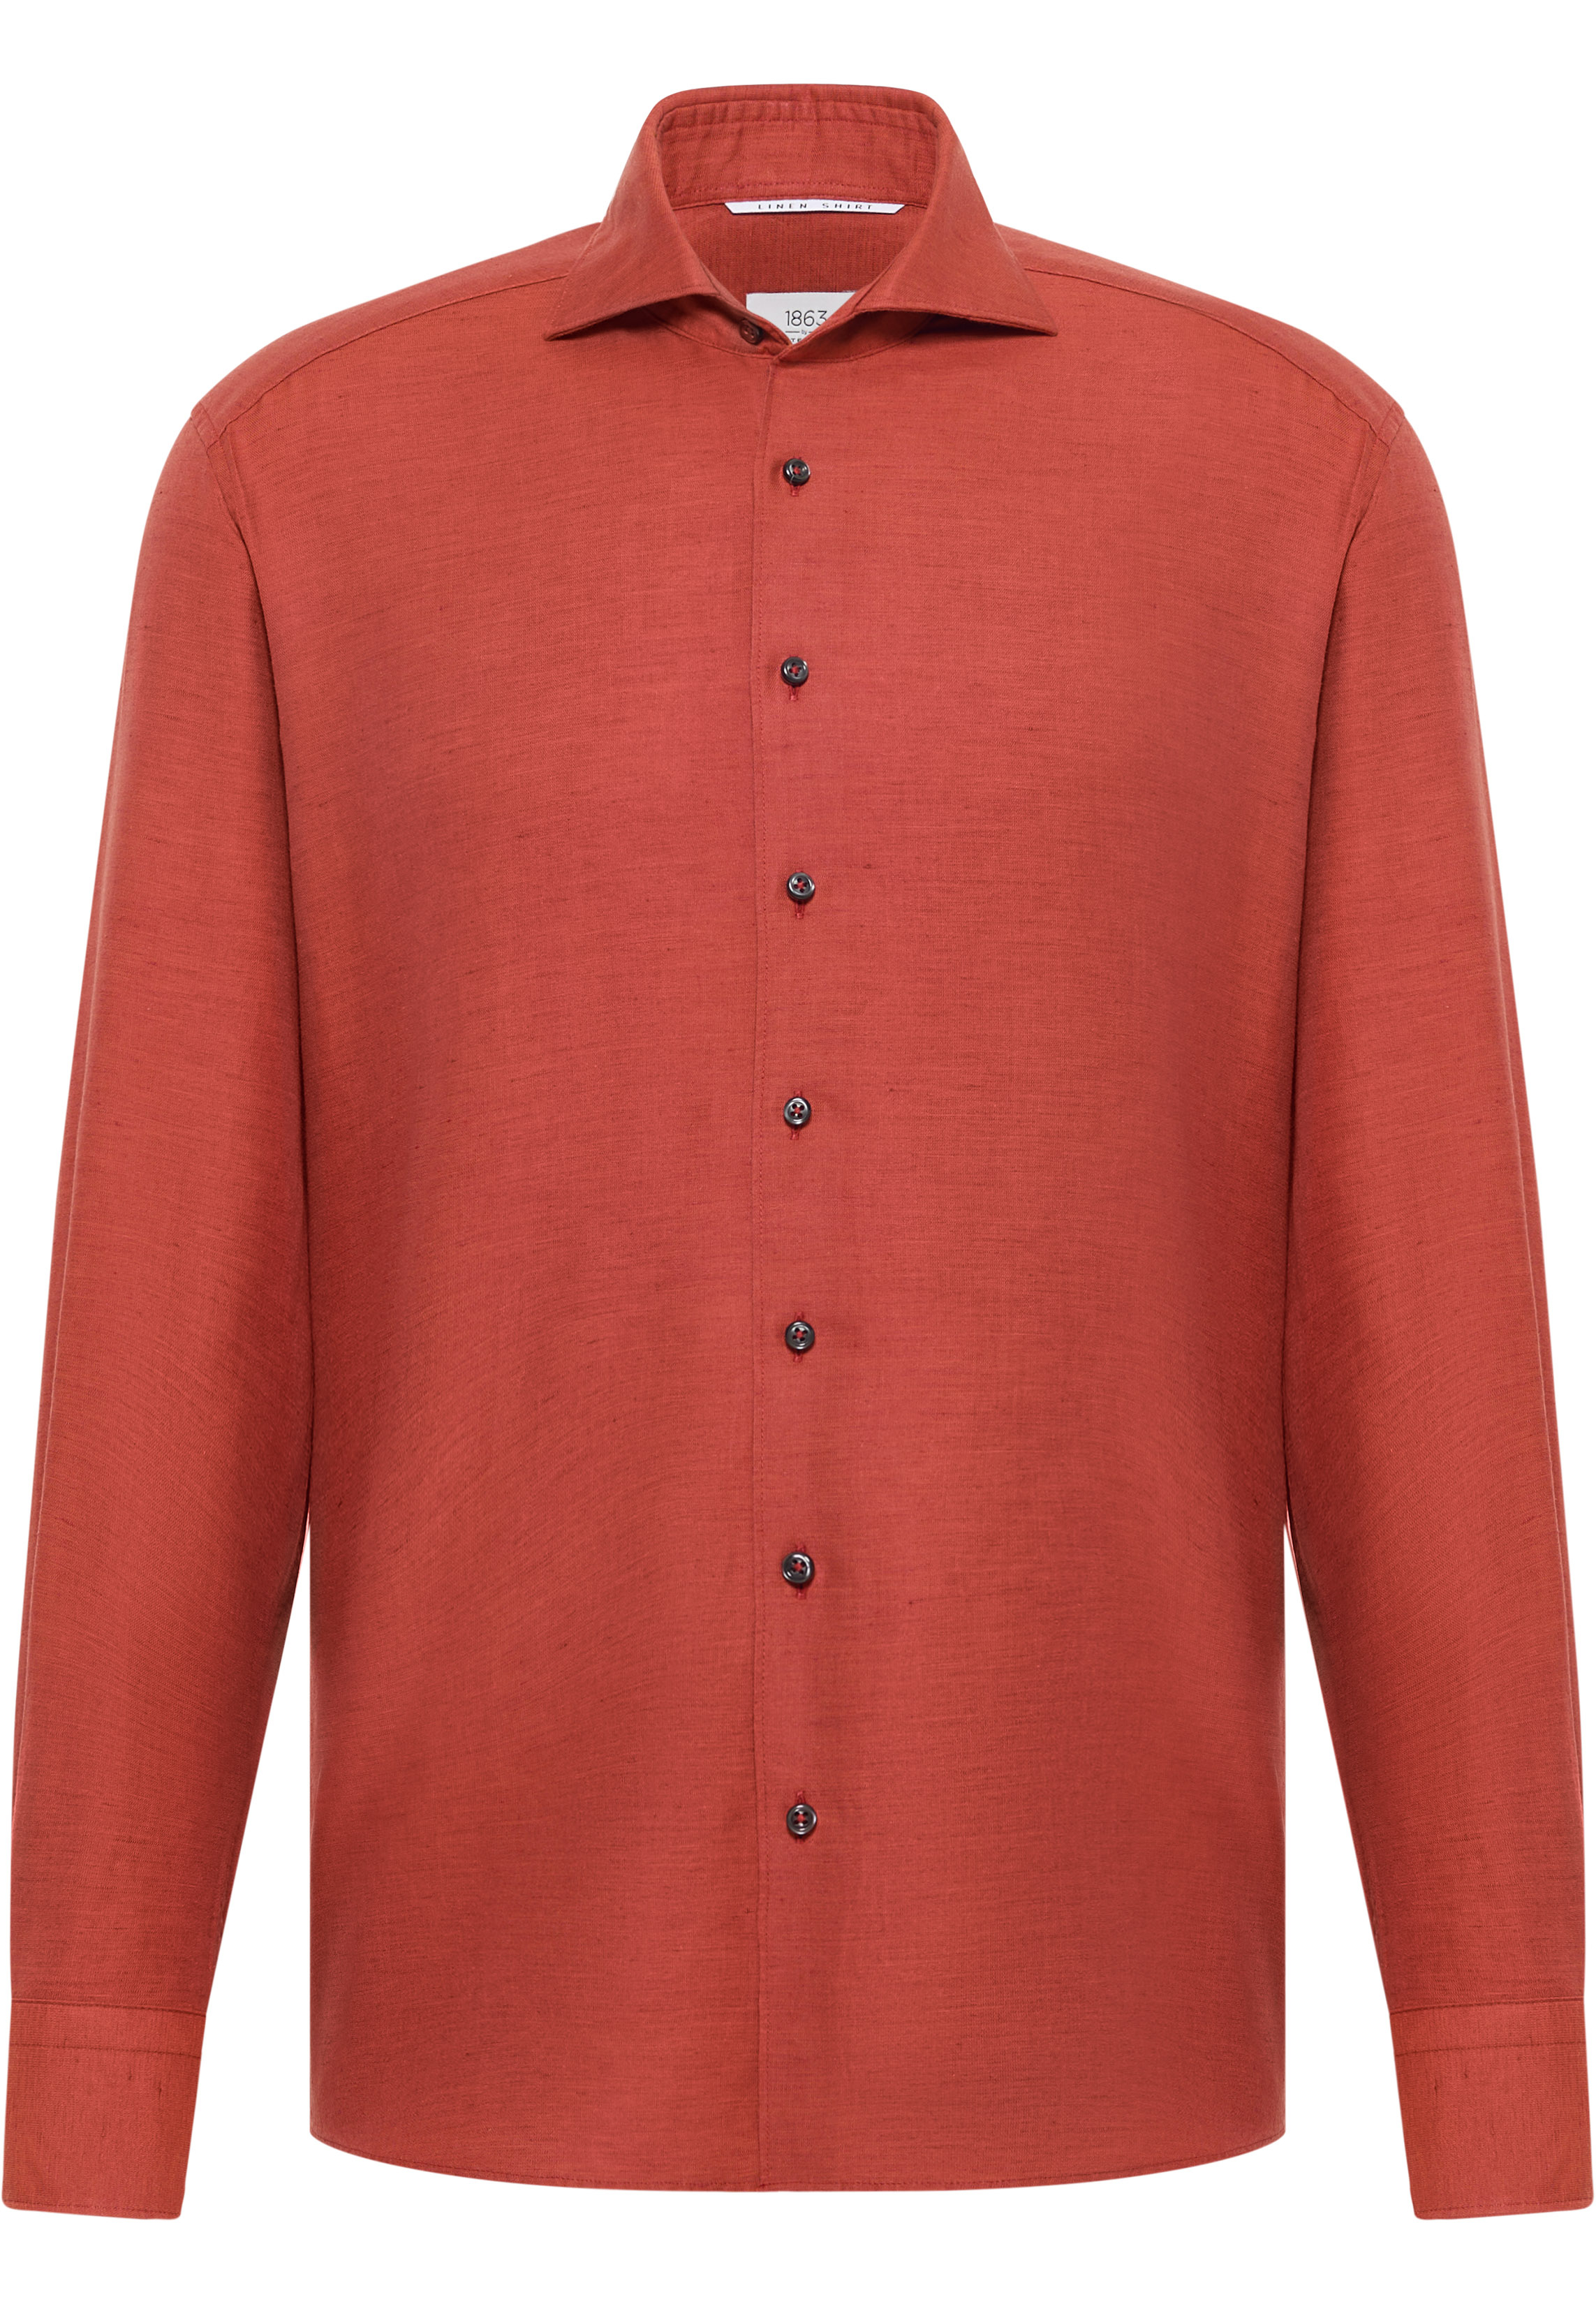 MODERN FIT Linen Shirt in donkerrood vlakte